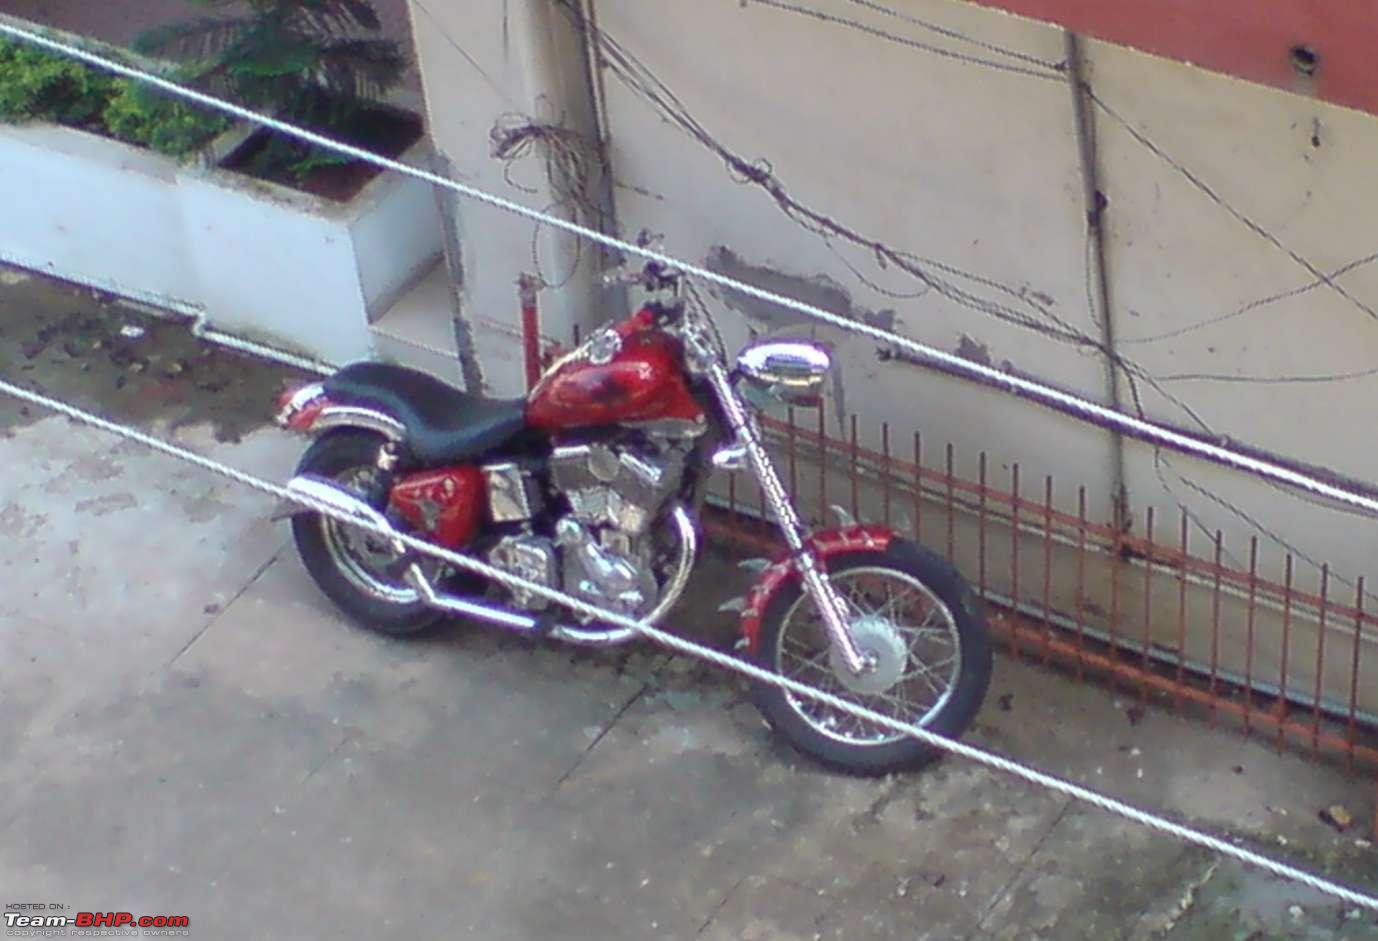 Mini Bullet - Pinki : r/indianbikes